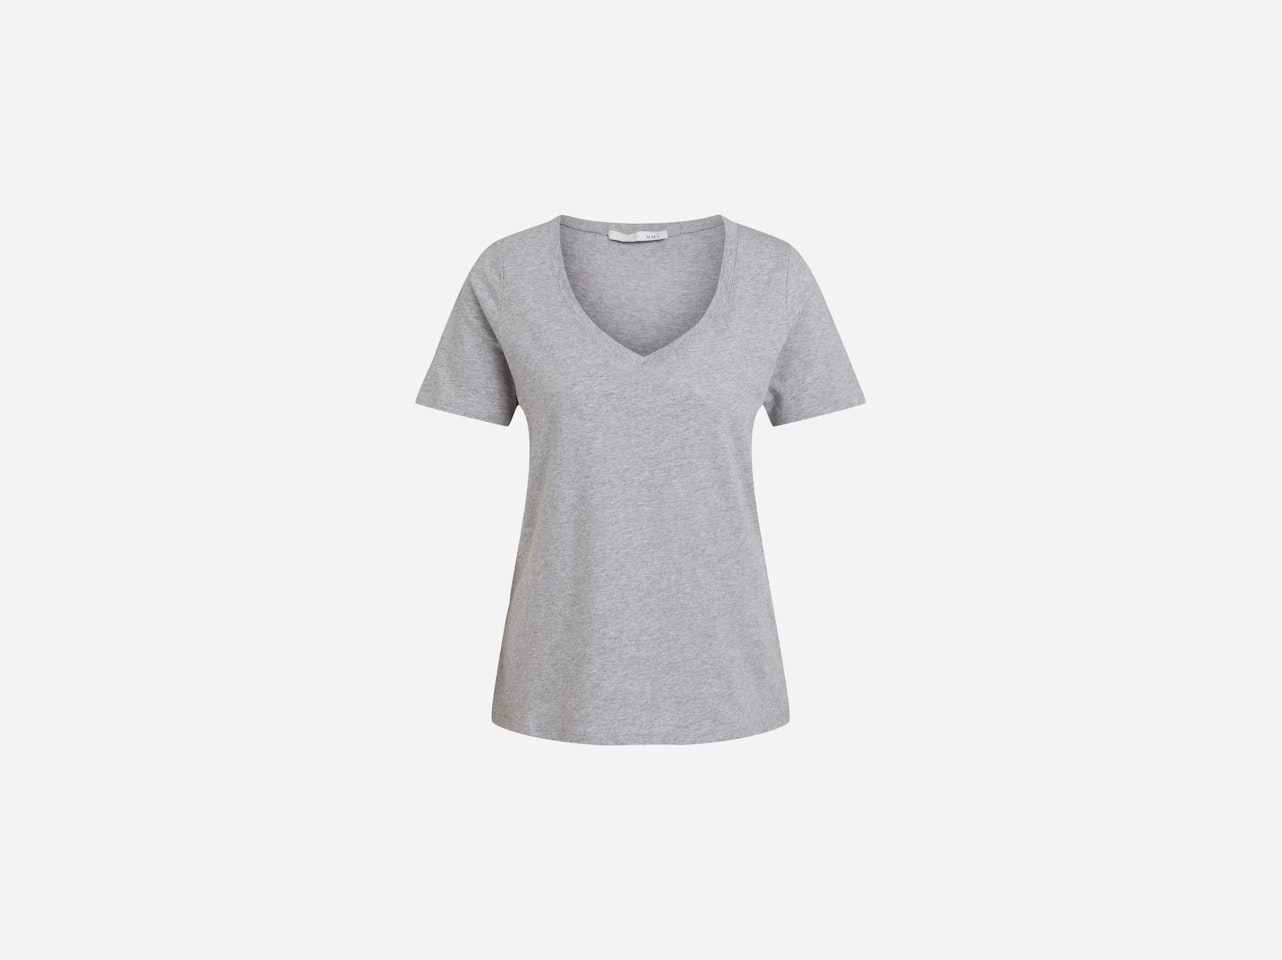 Bild 5 von CARLI T-shirt 100% organic cotton in light grey | Oui